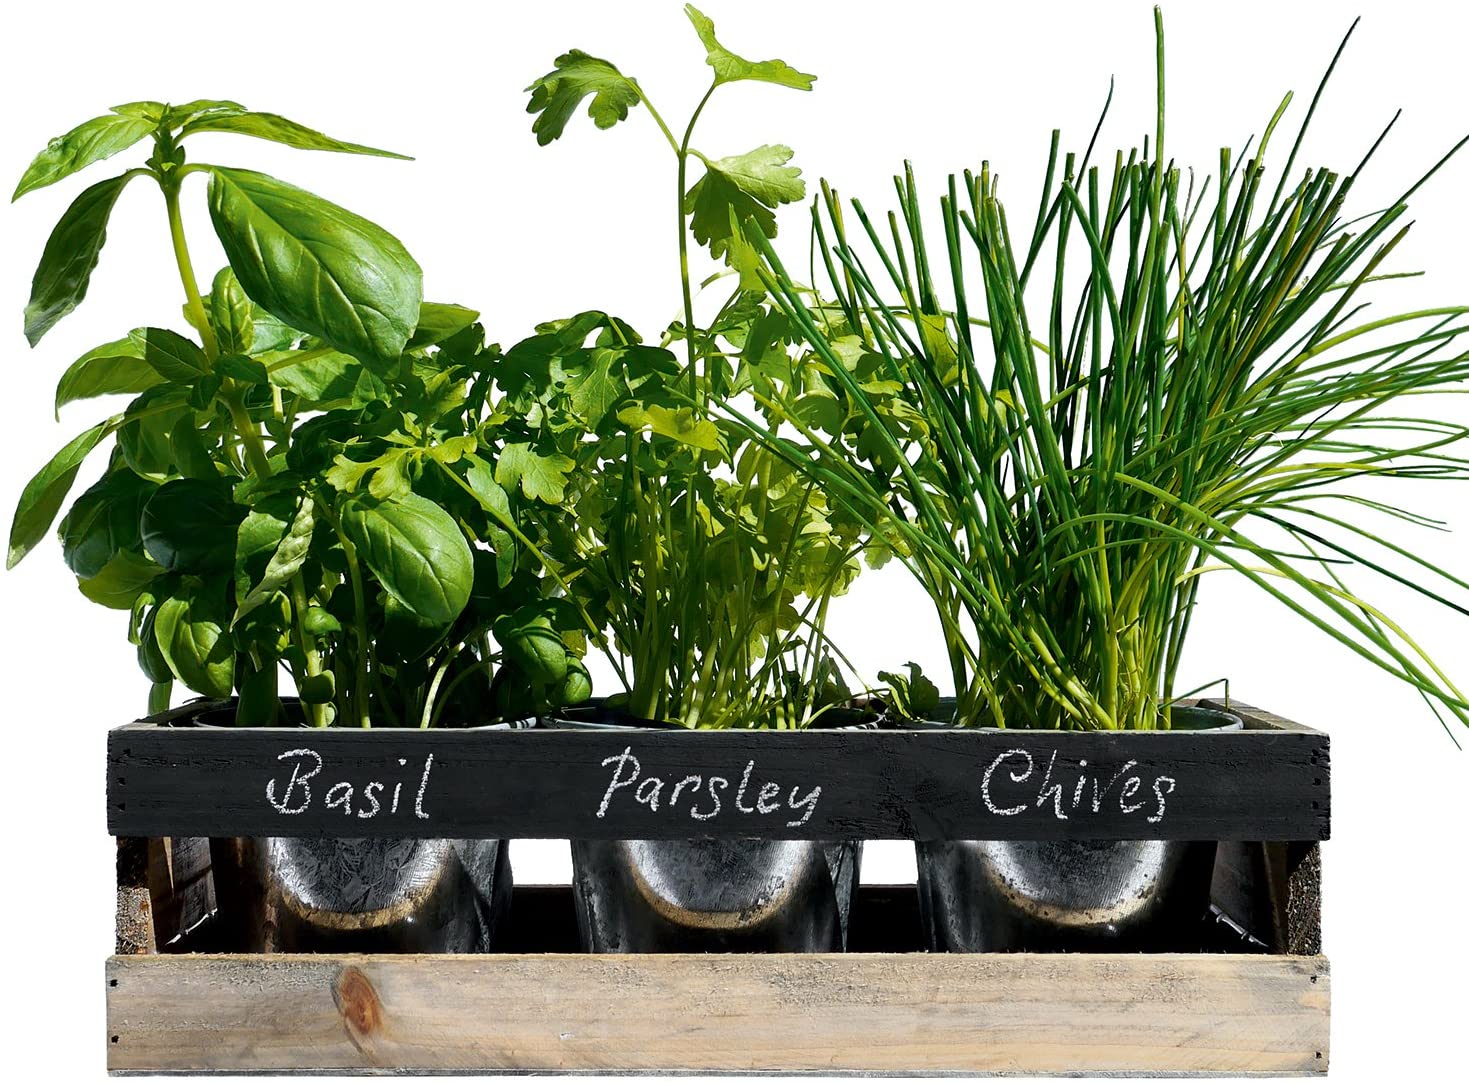 Keywords: Herb Plants, Wooden Crate